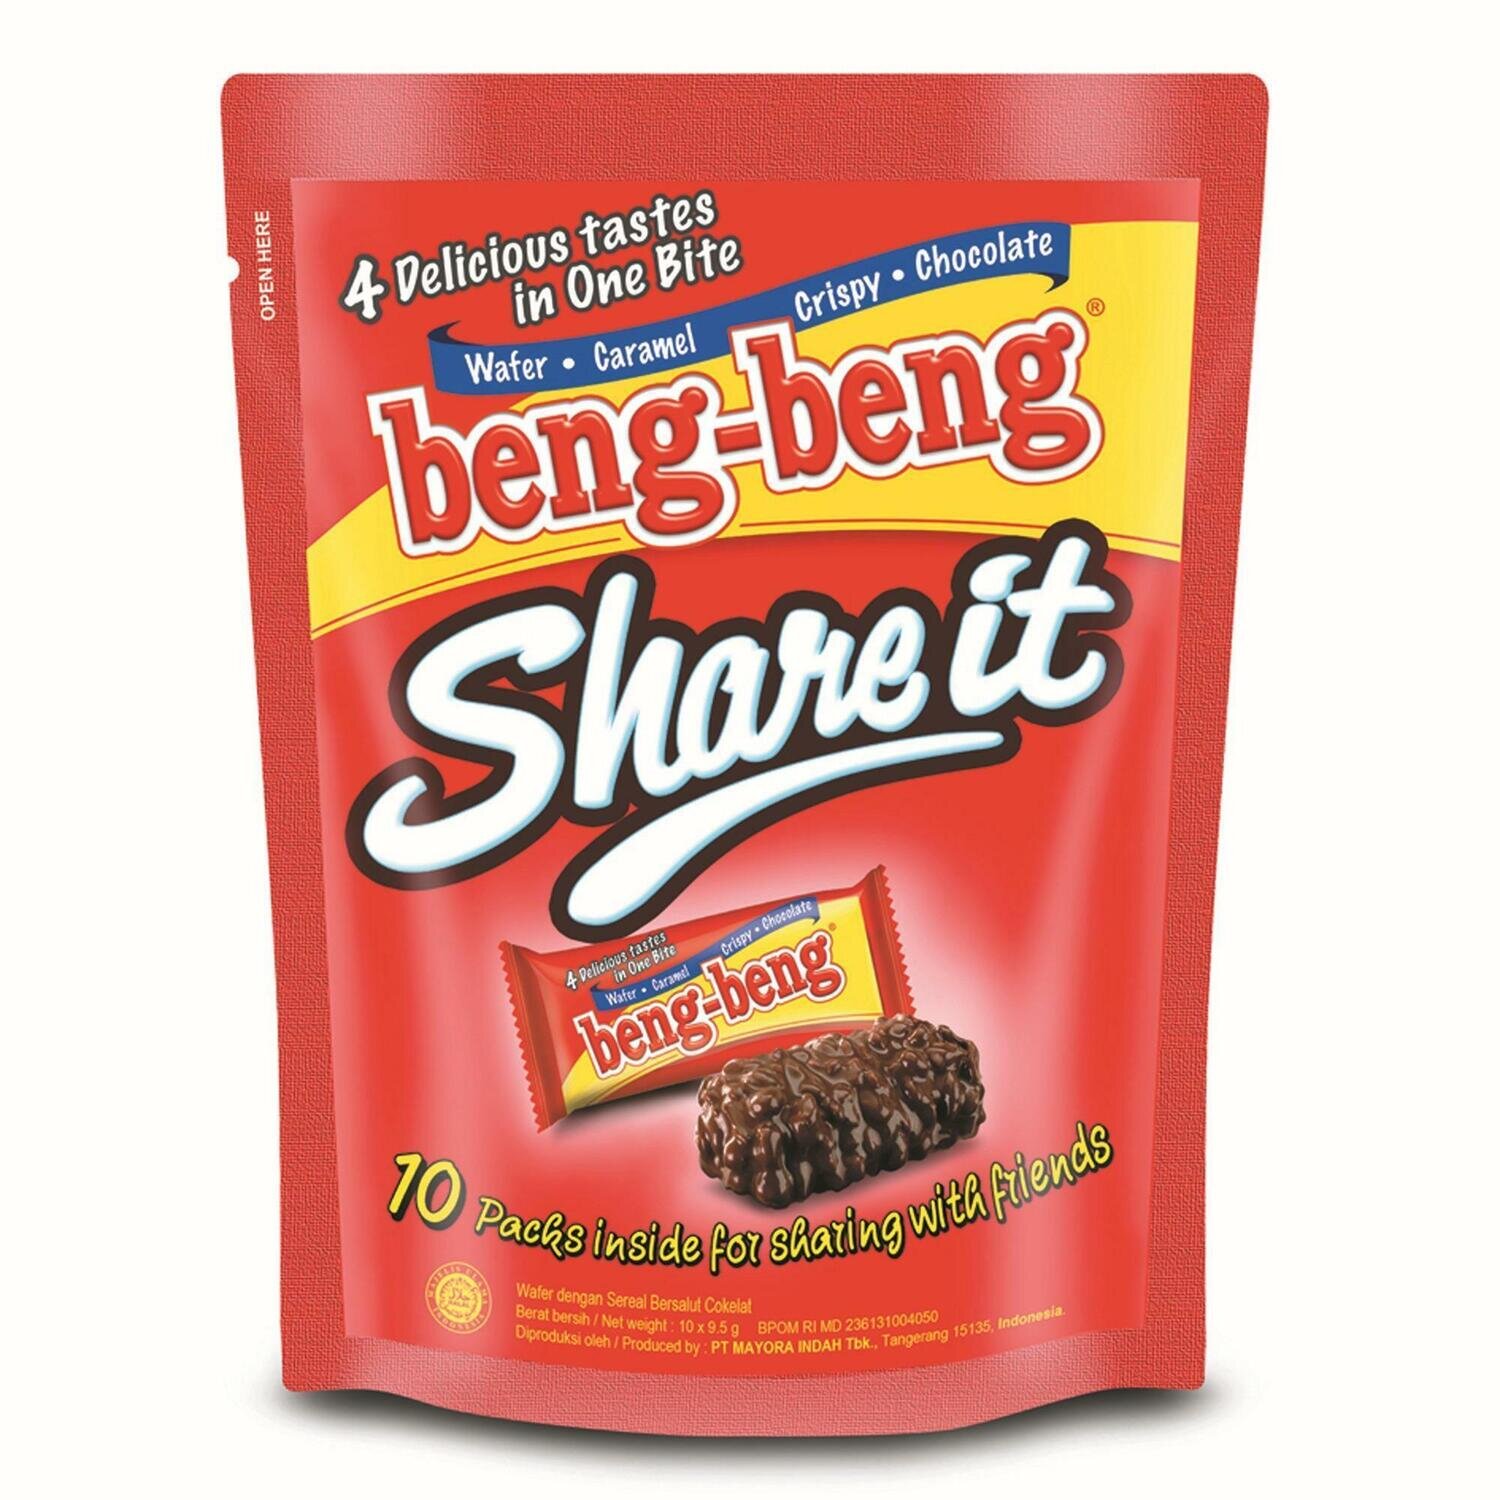 beng-beng Share it - 10 Packs inside  (total 95 grams)